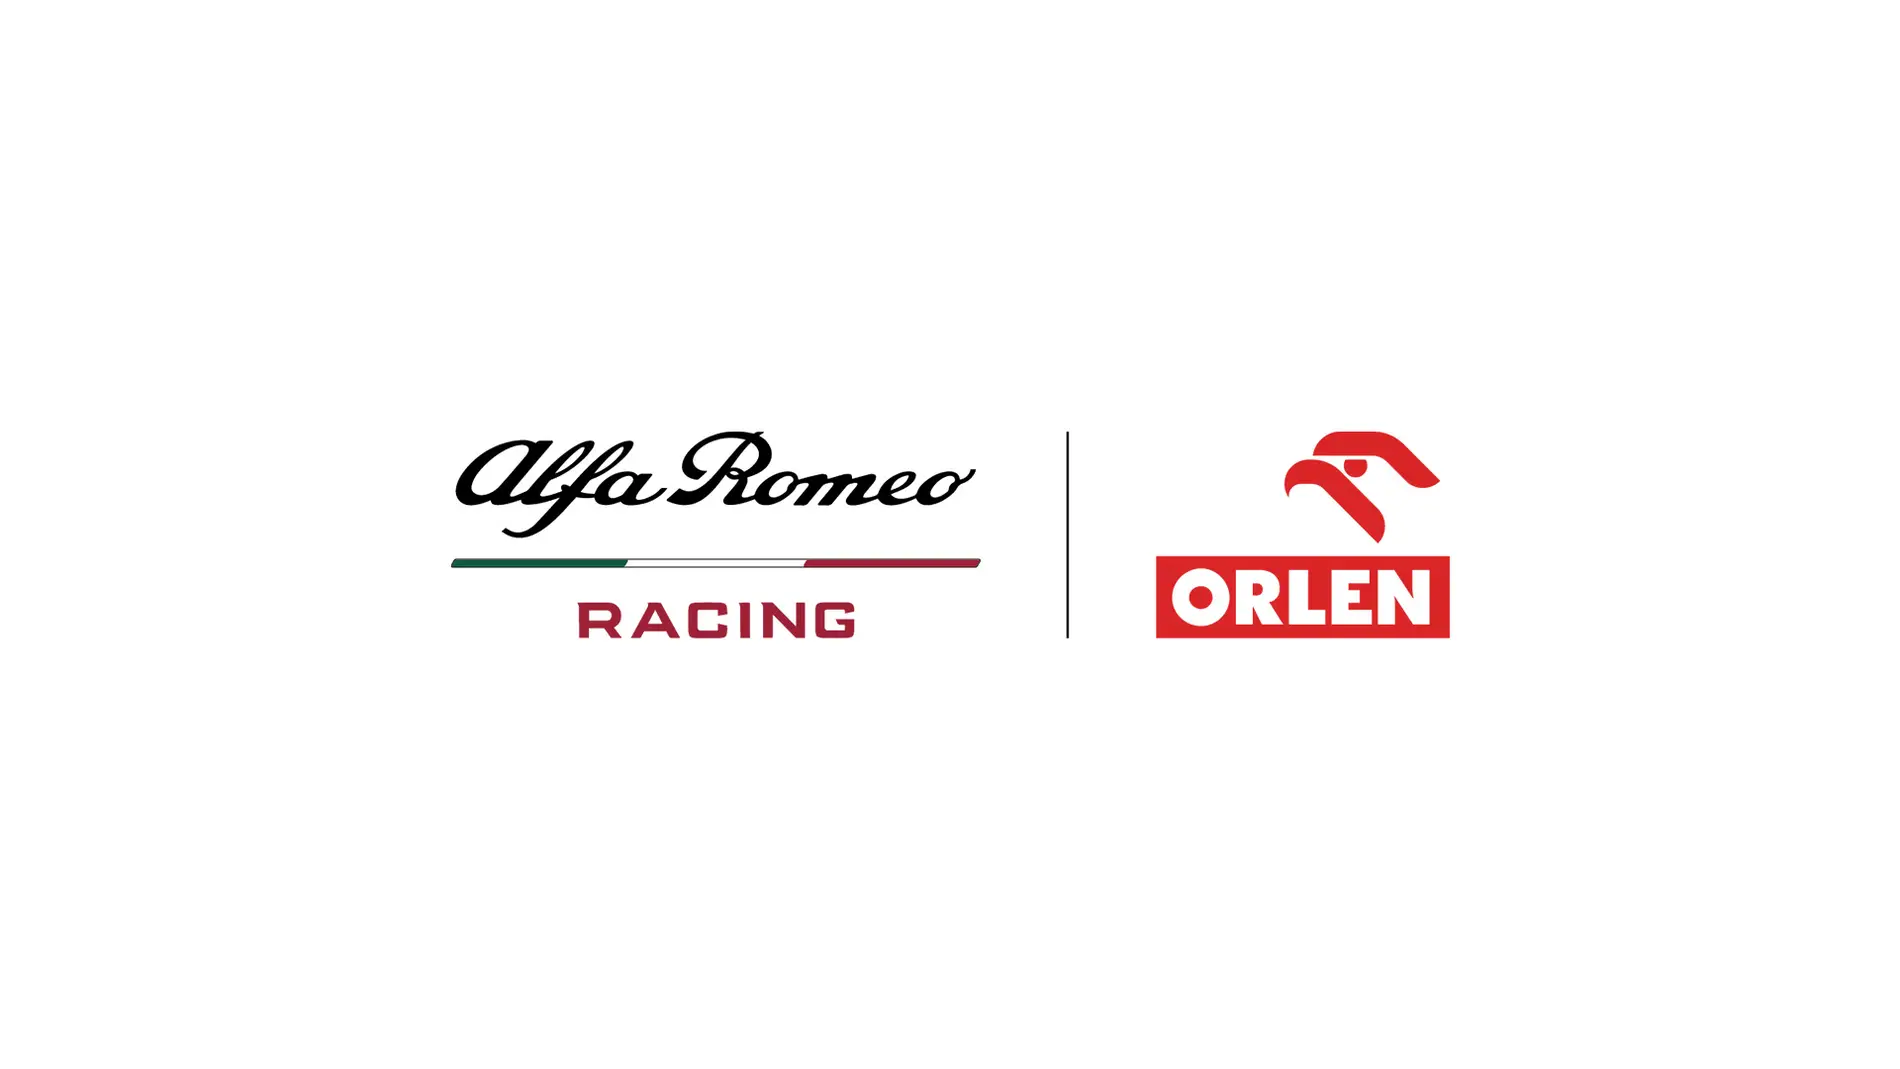 Alfa Romeo Orlen Logos 2020 